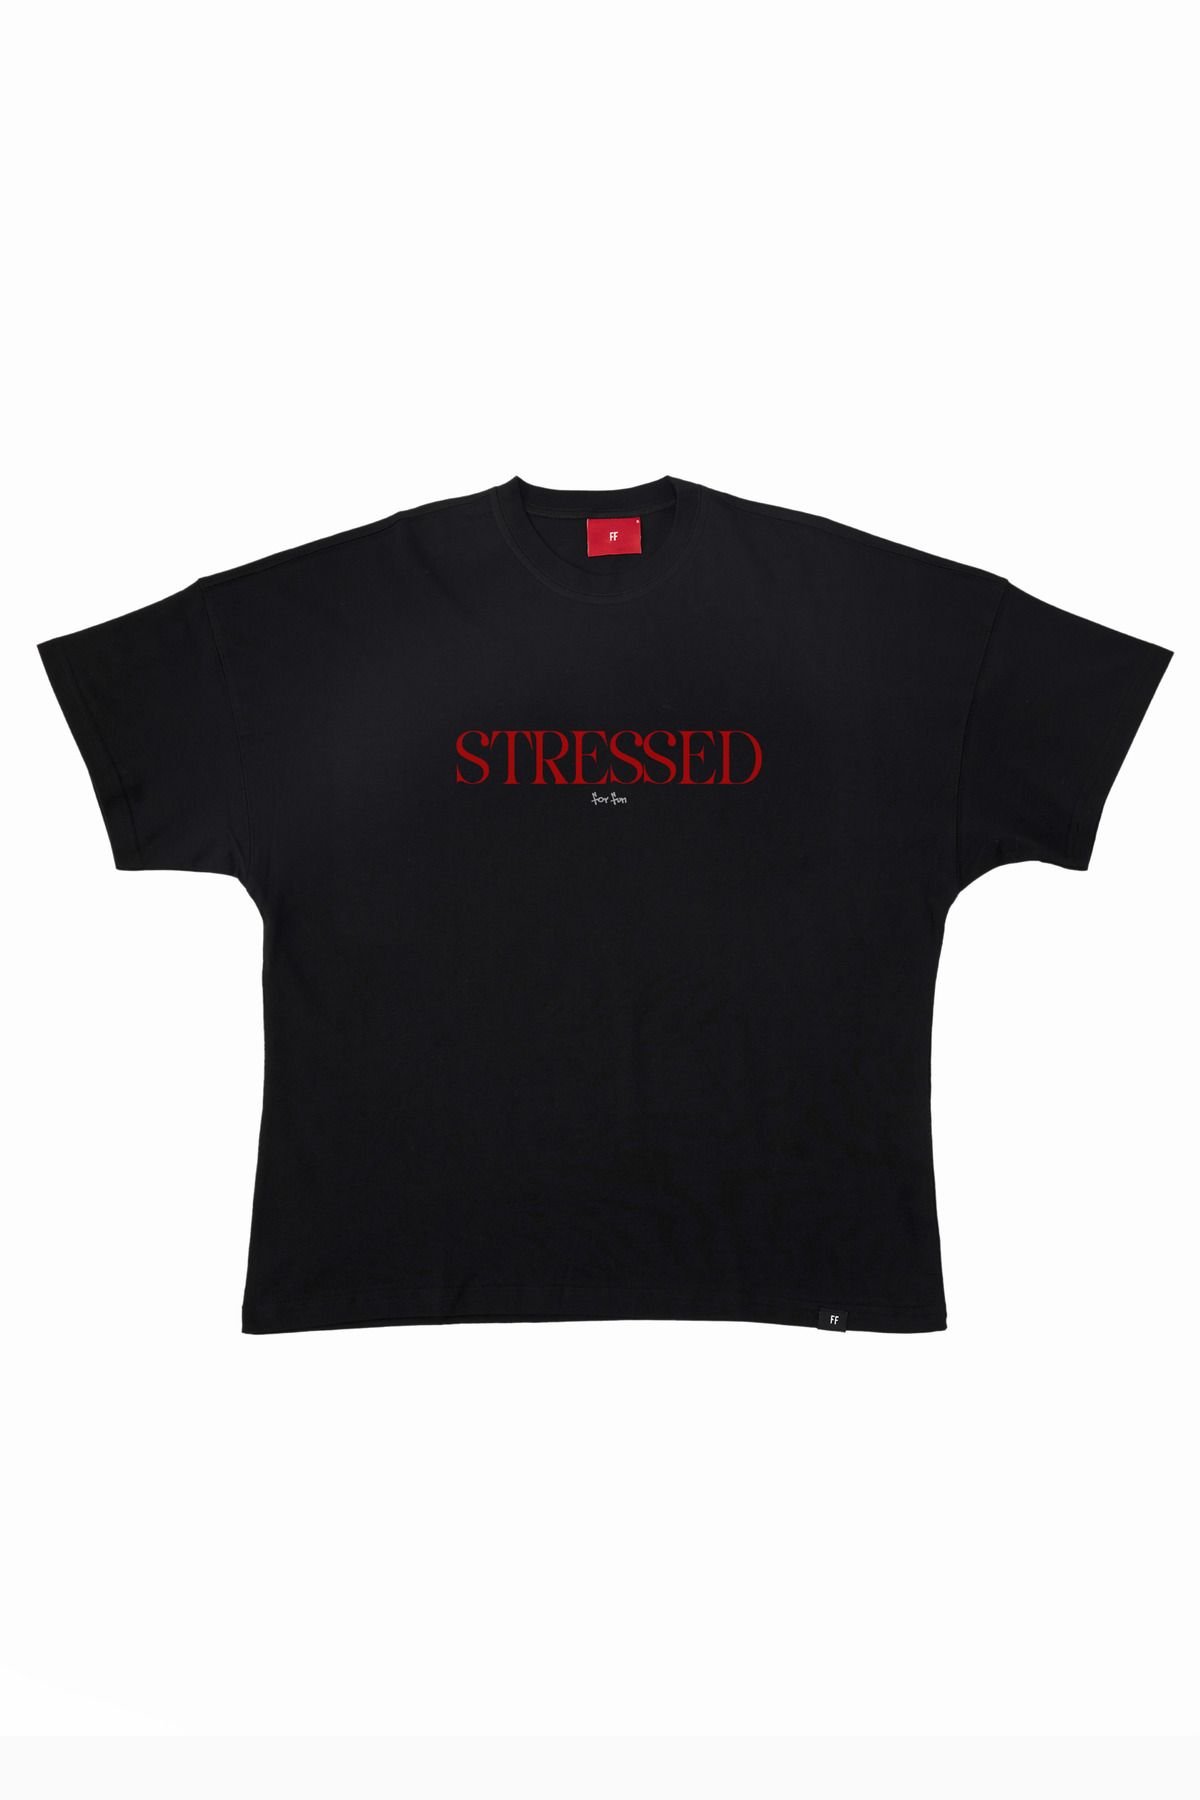 For Fun Stressed / Drop Shoulder Oversize T-shirt